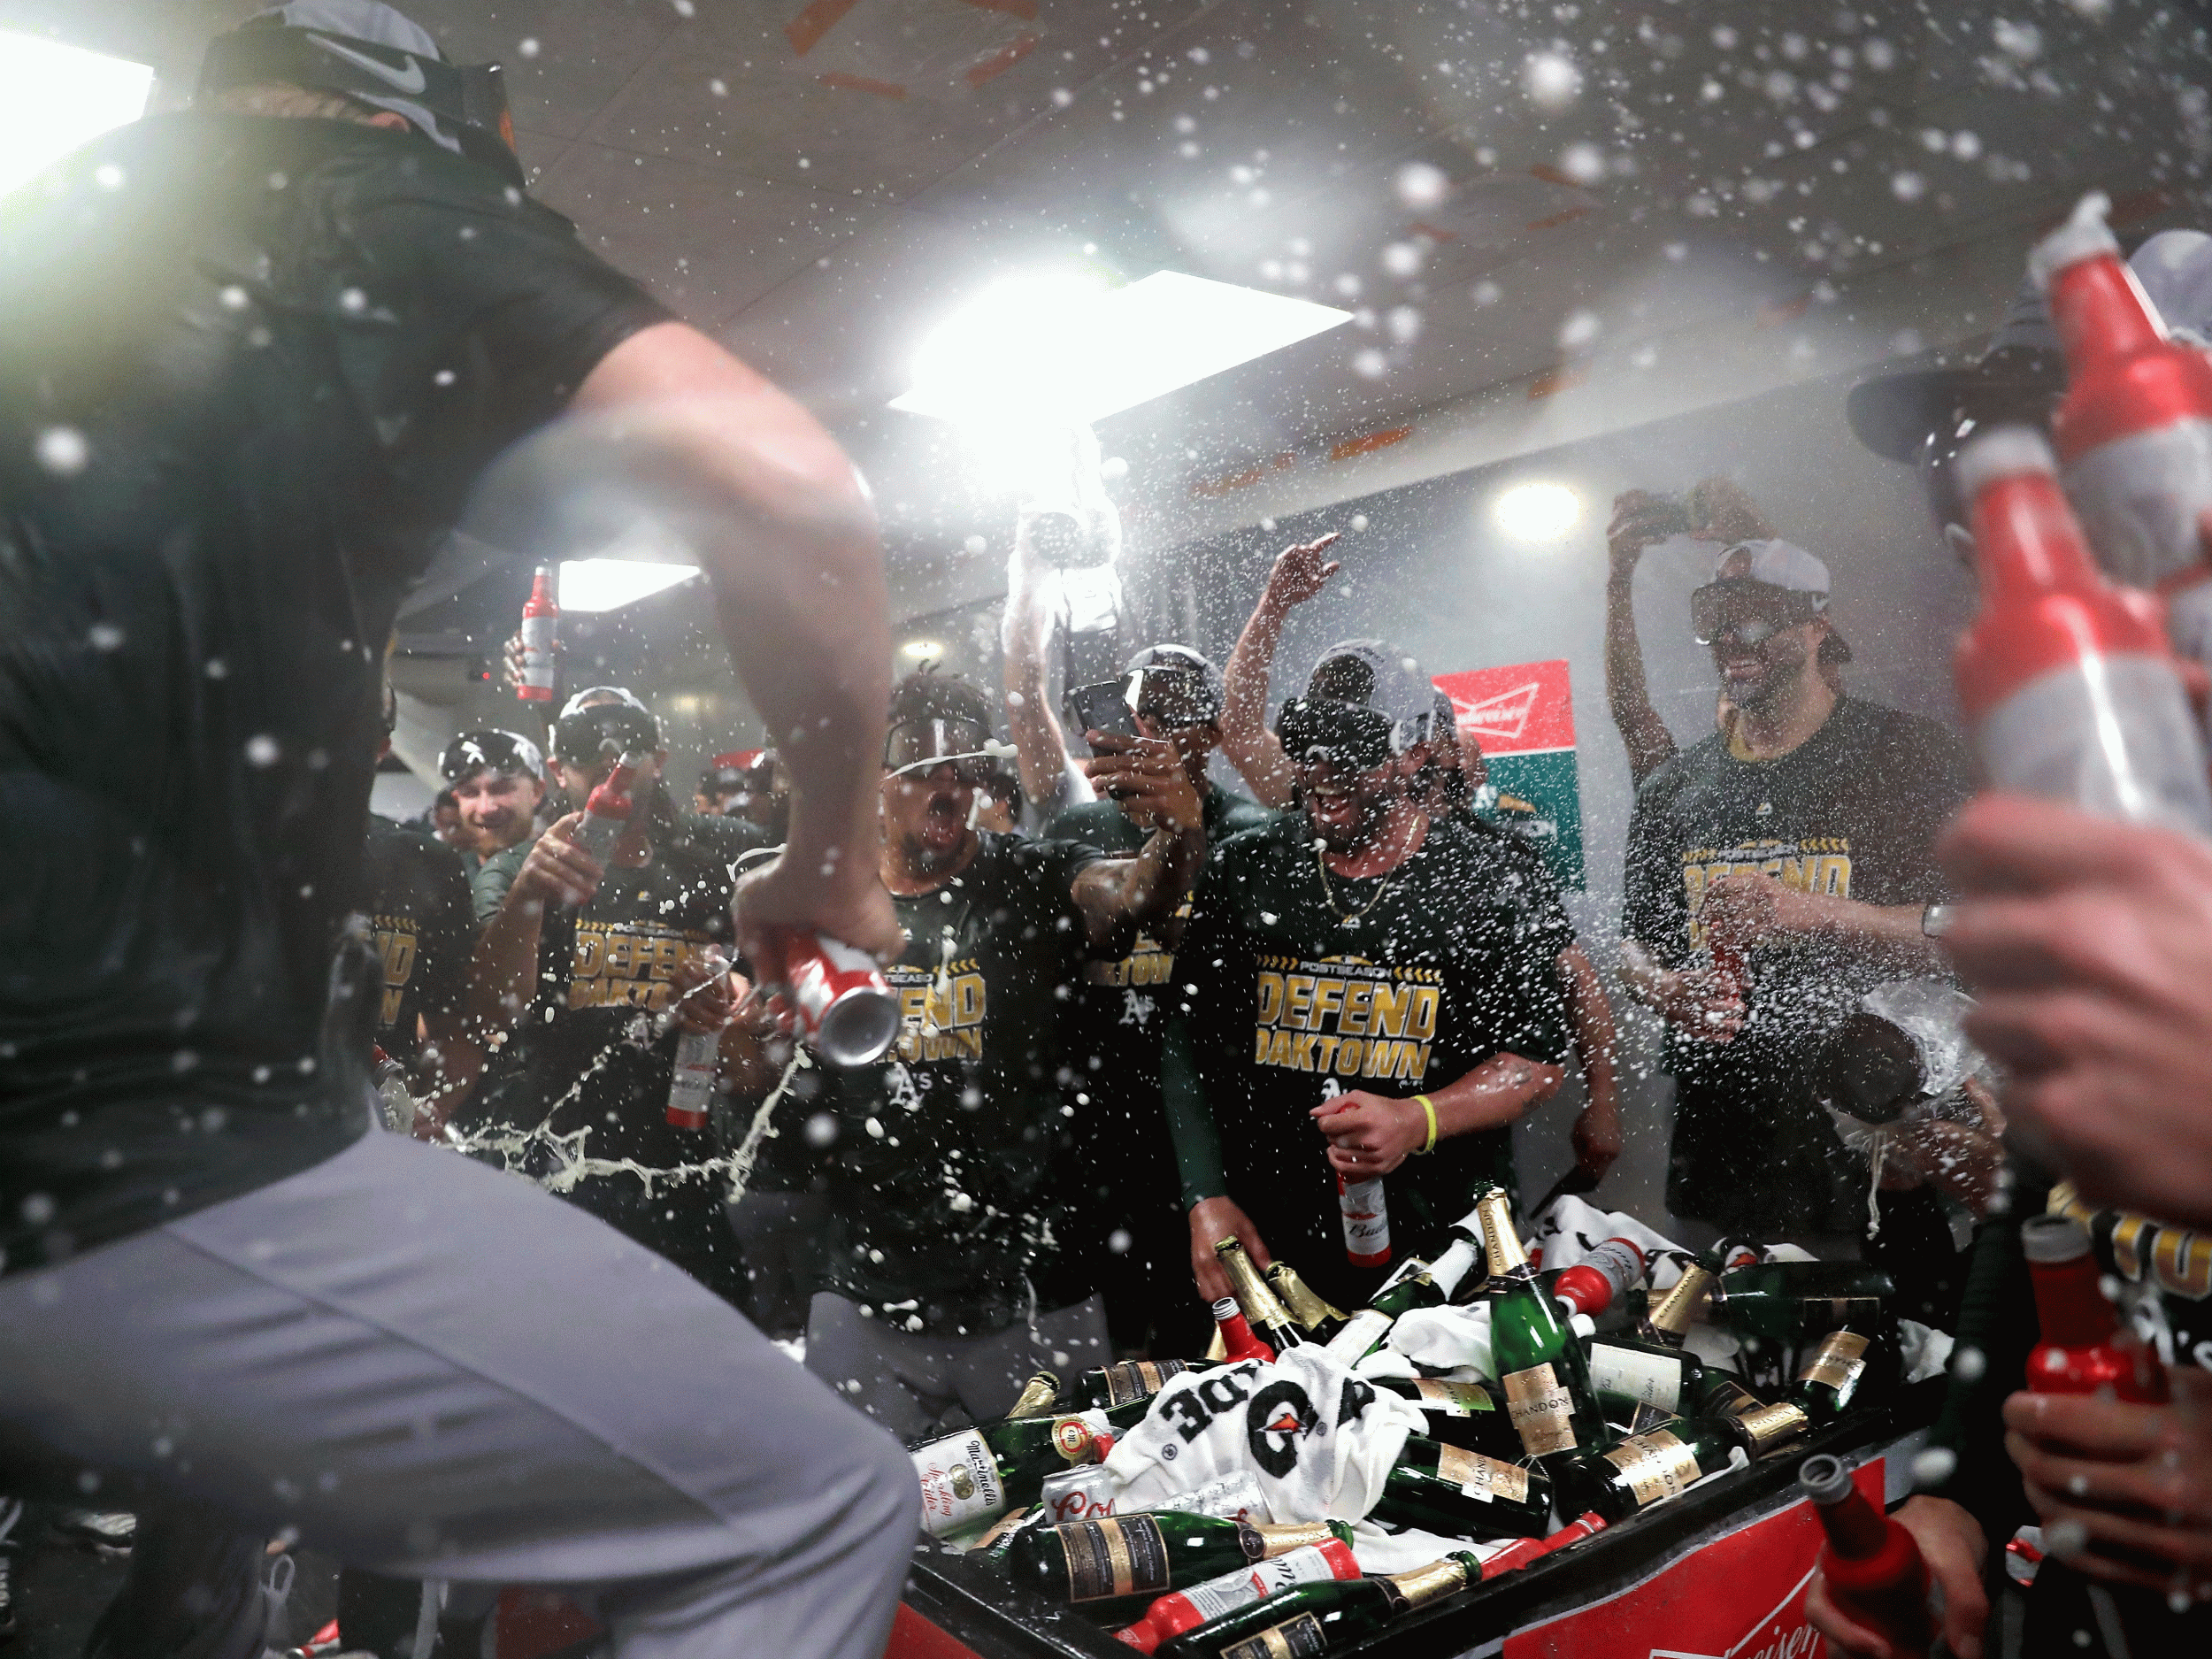 The Oakland Athletics celebrate reaching the post-season